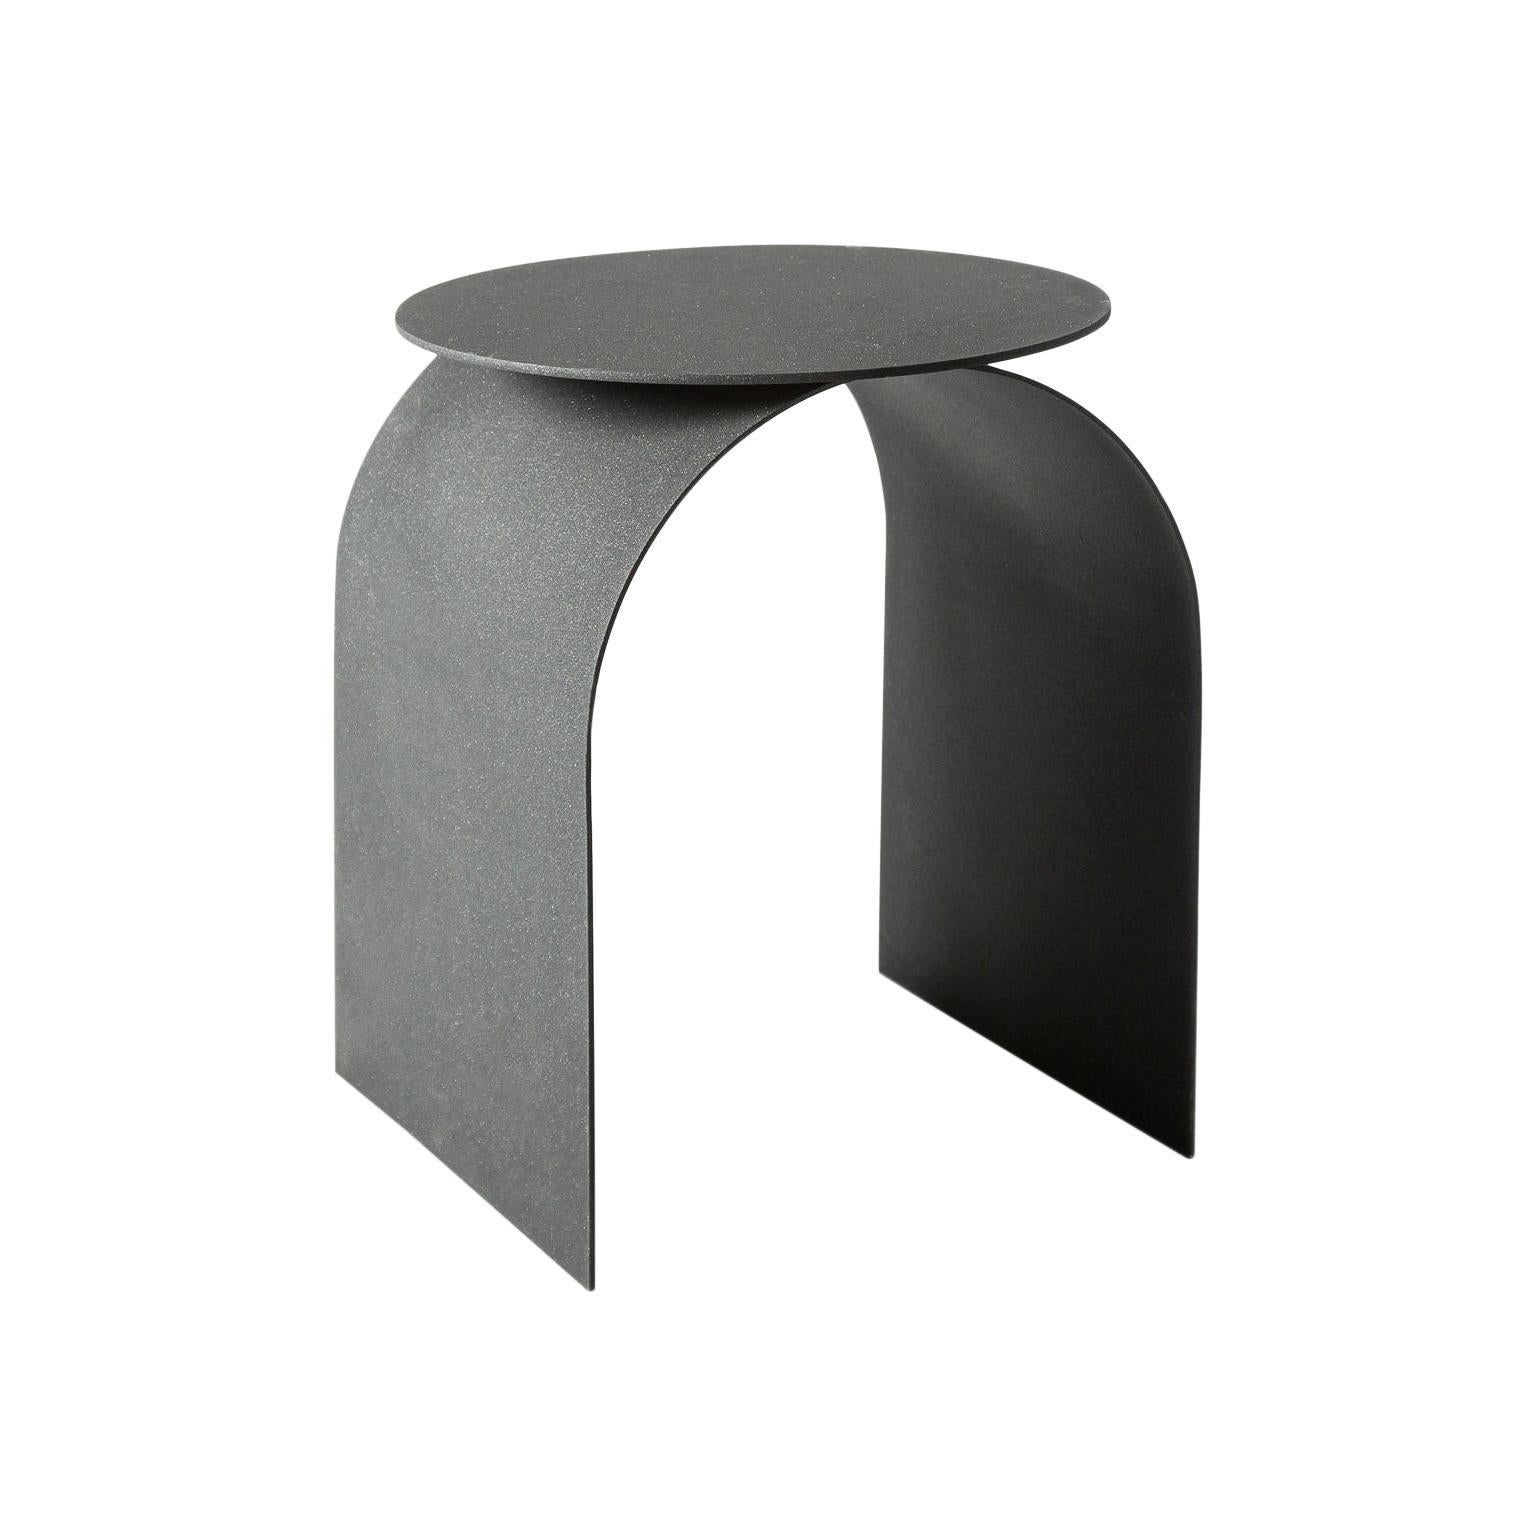 Spinzi Palladium Sculptural Side Table, Black Metal, Collectible Italian Design For Sale